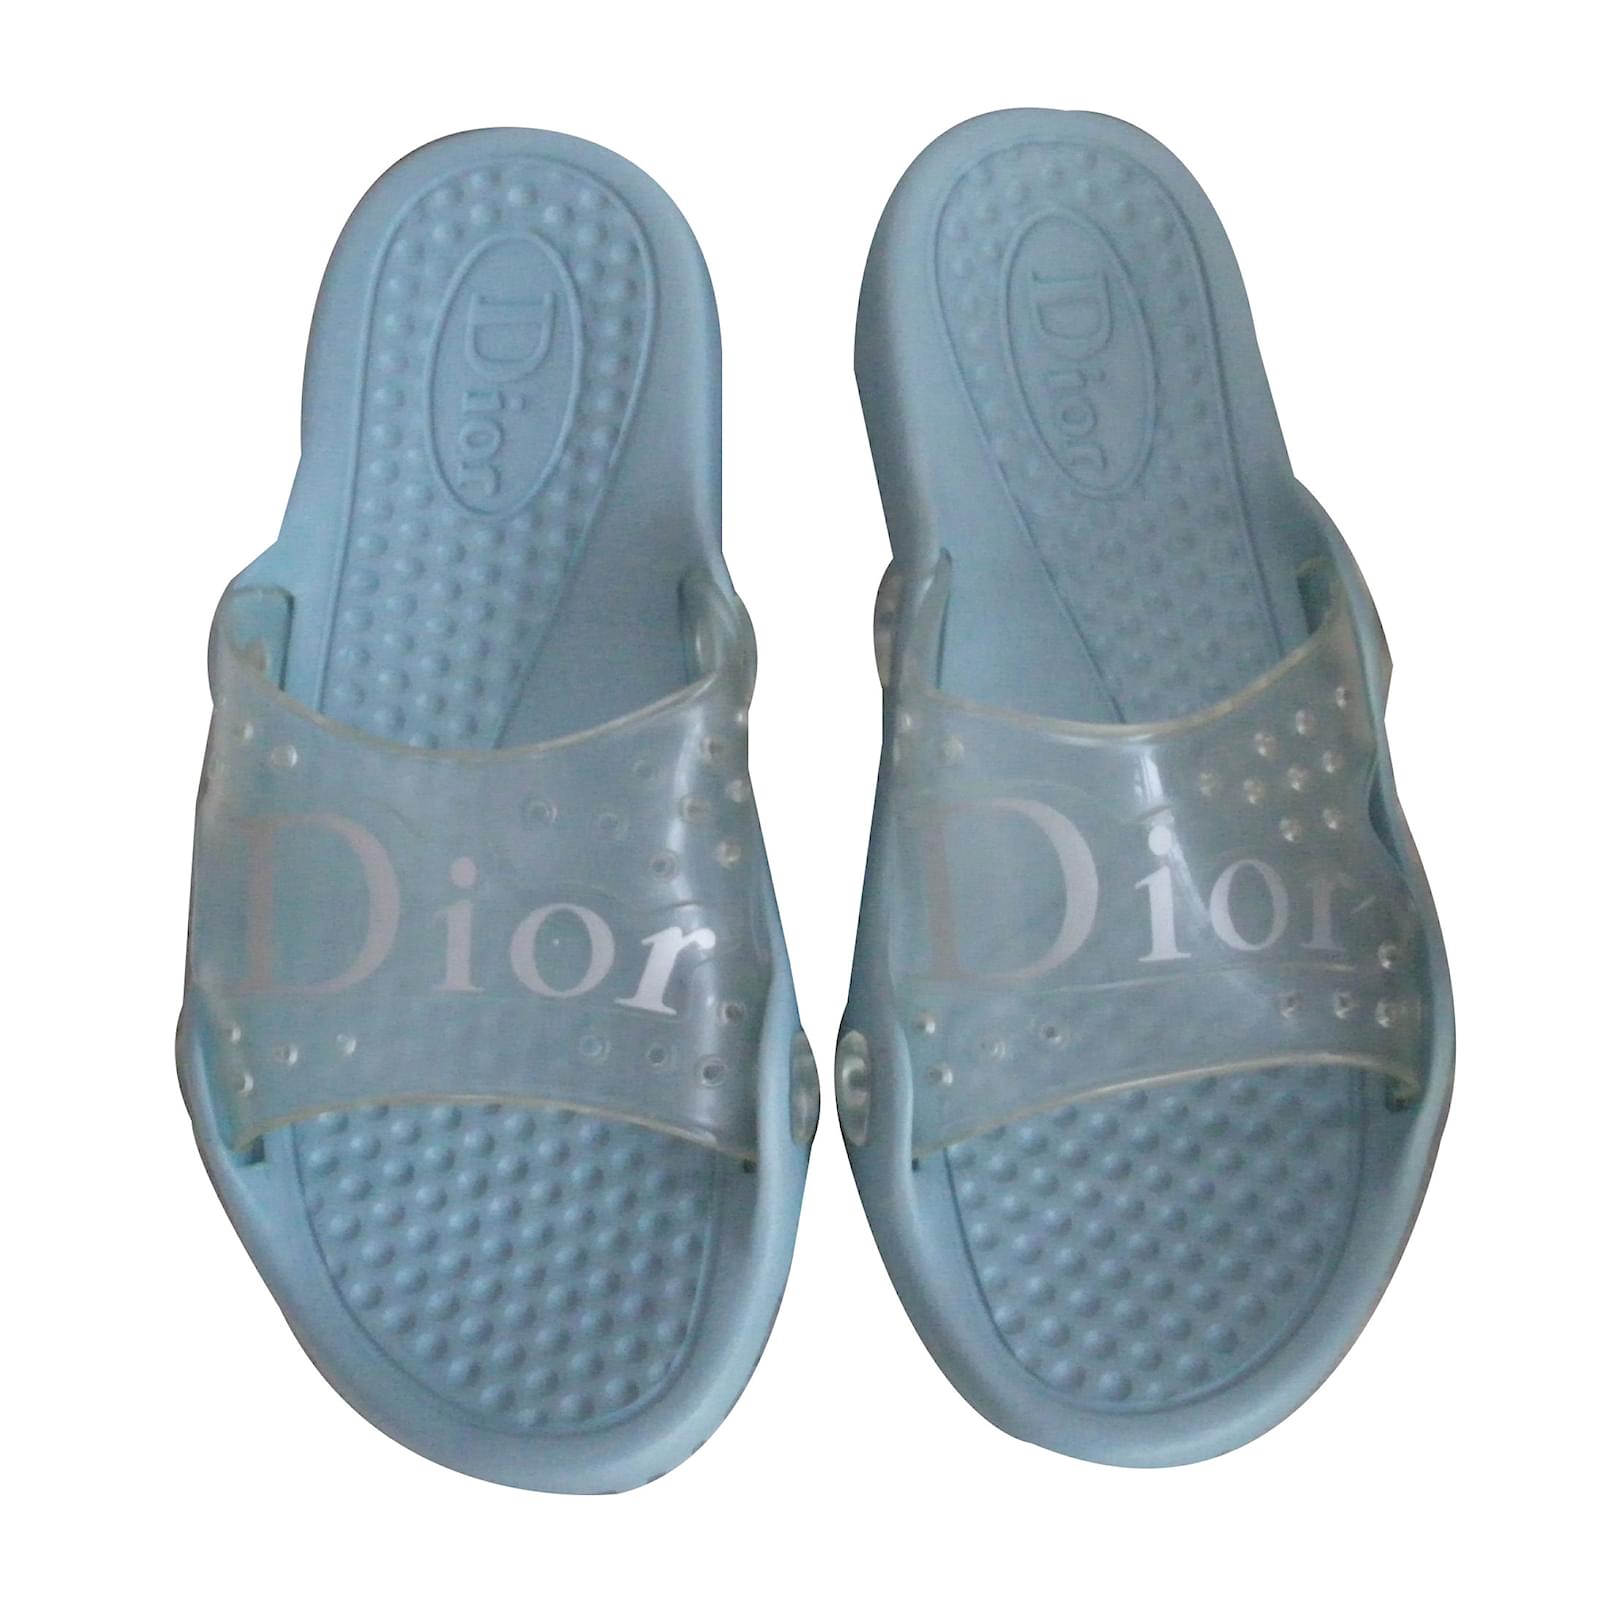 Dior sandals Sandals Rubber Other ref 